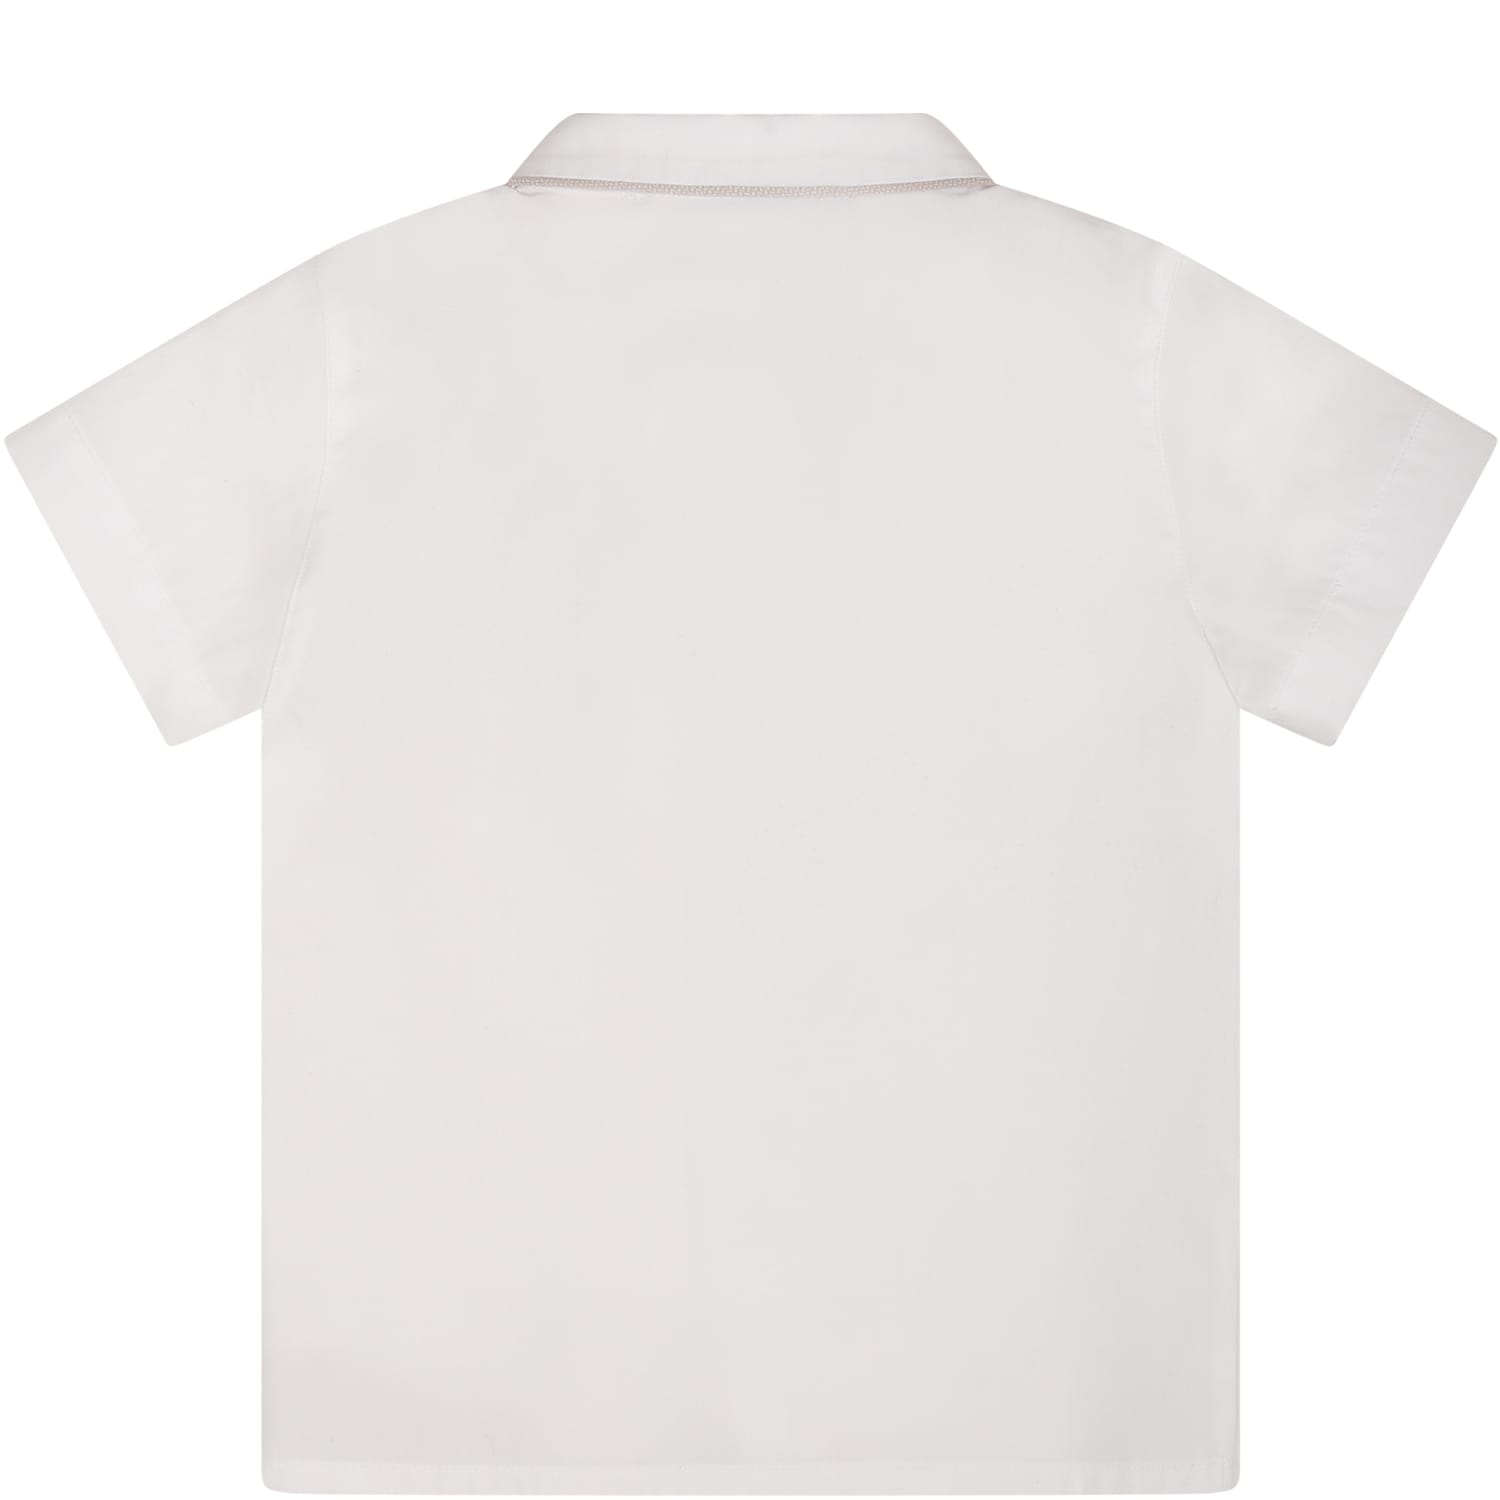 Shop Little Bear White Shirt For Baby Boy